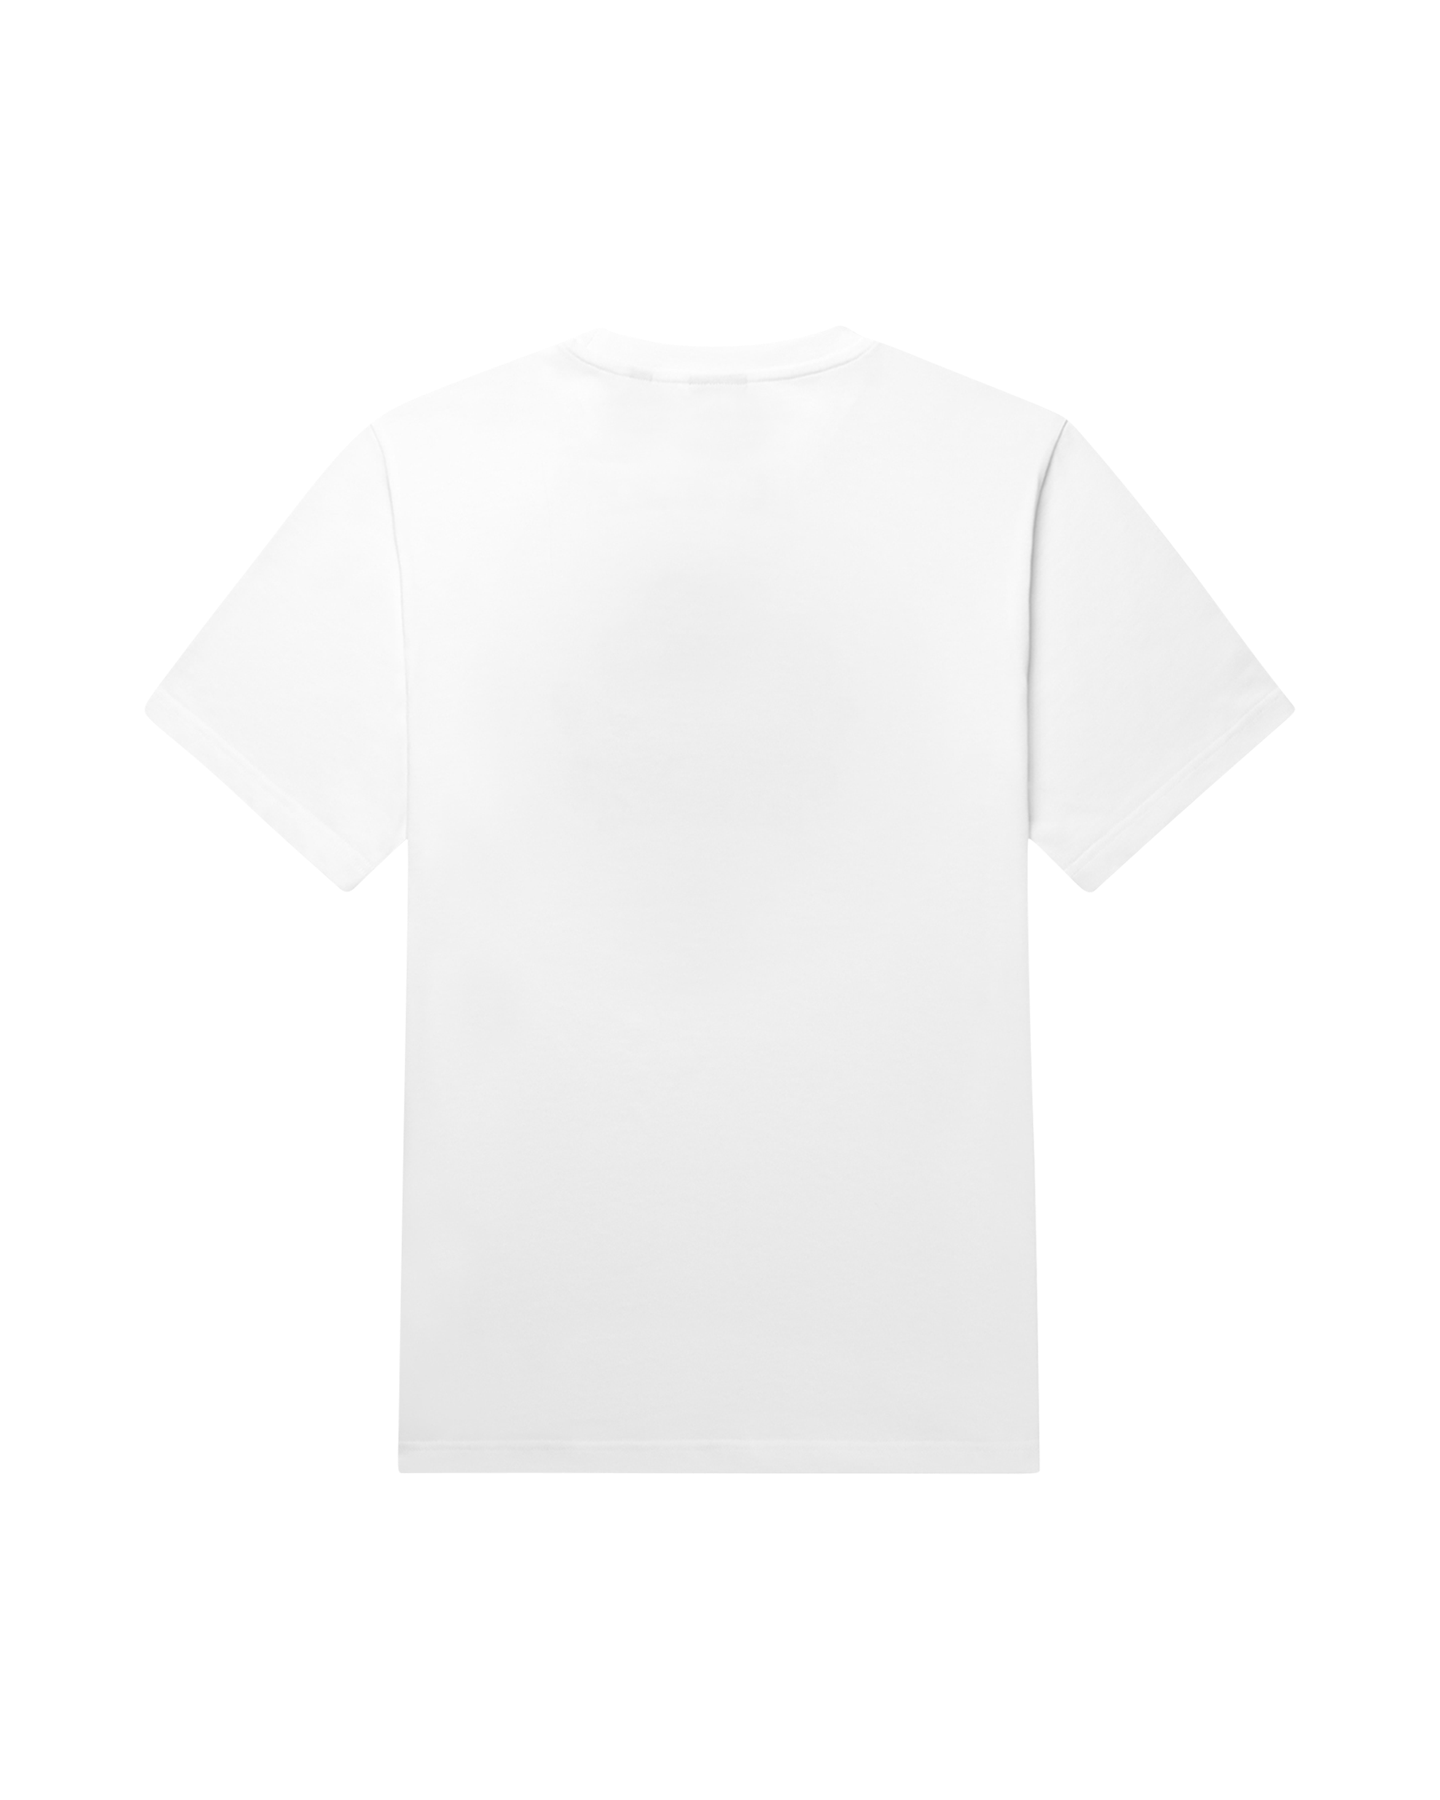 Bepalen essence aftrekken Daily Paper Nakato Ss T-Shirt Wit | Coef Men